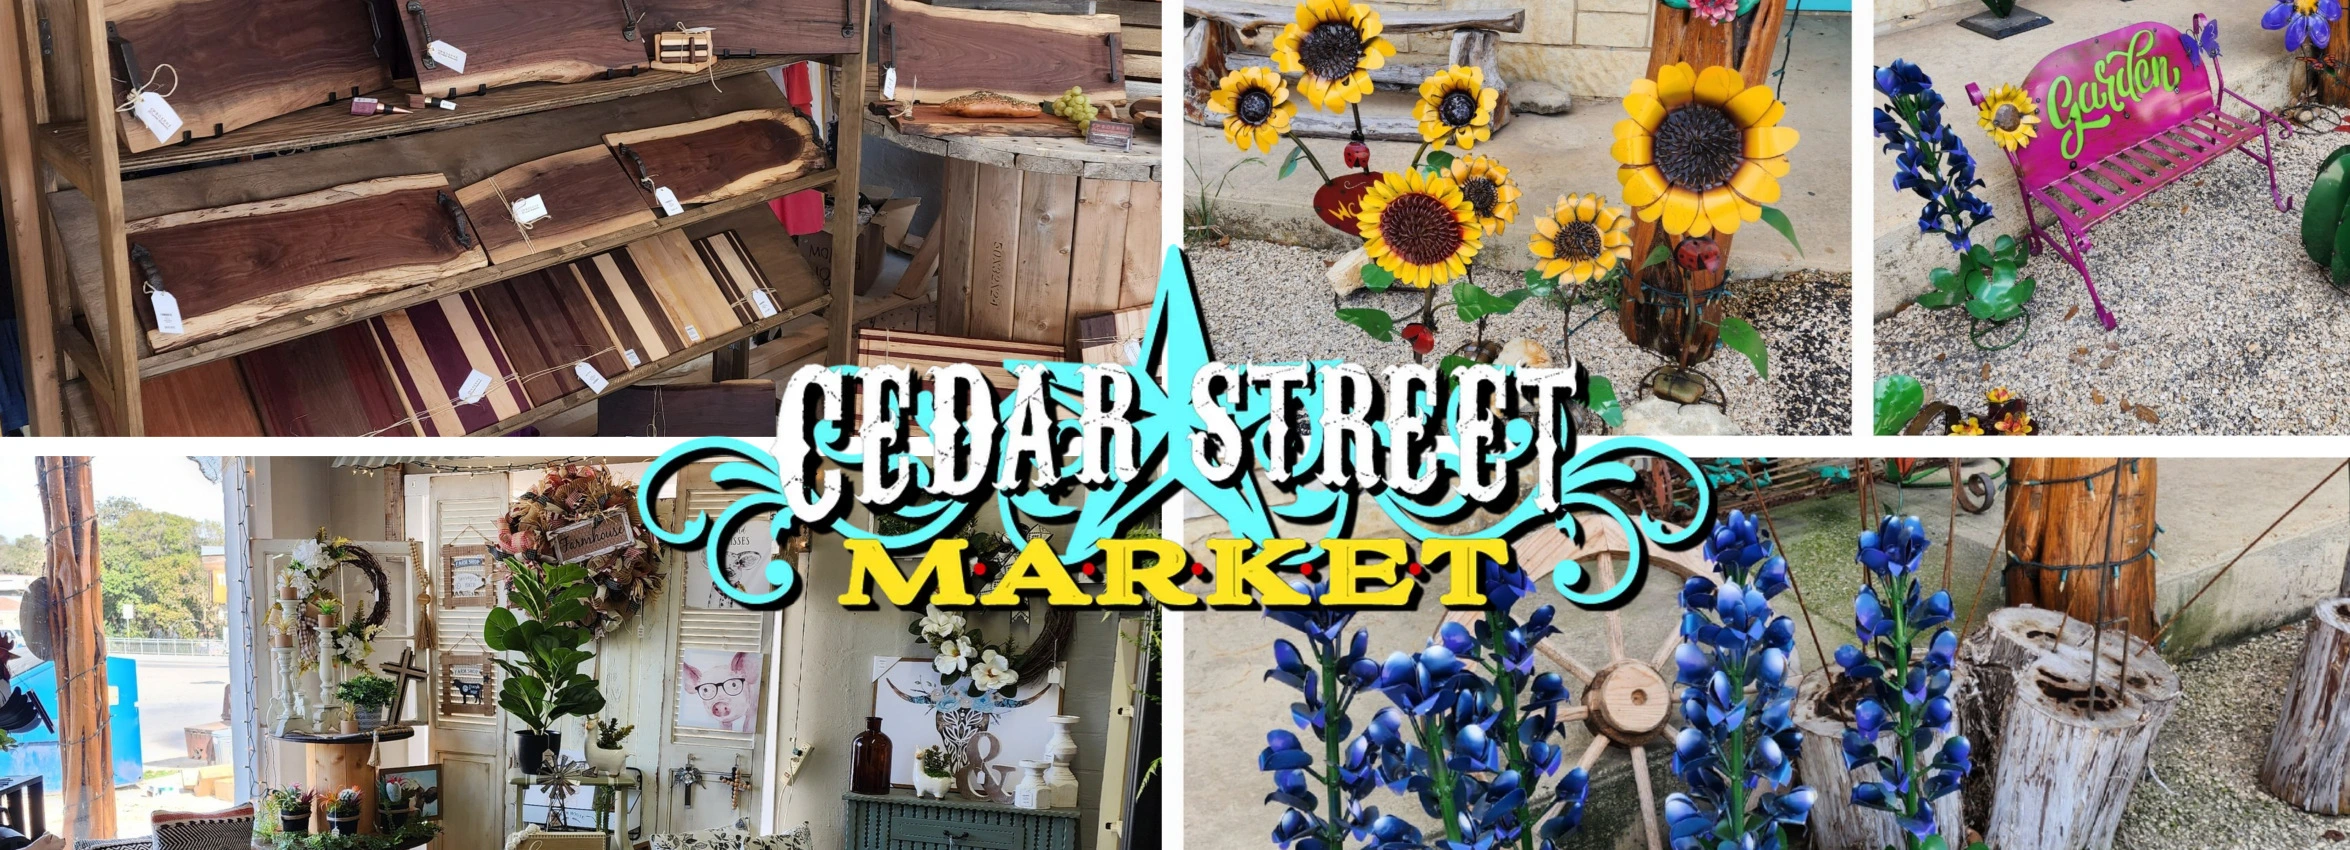 Cedar-Street-Market_desktop_ET